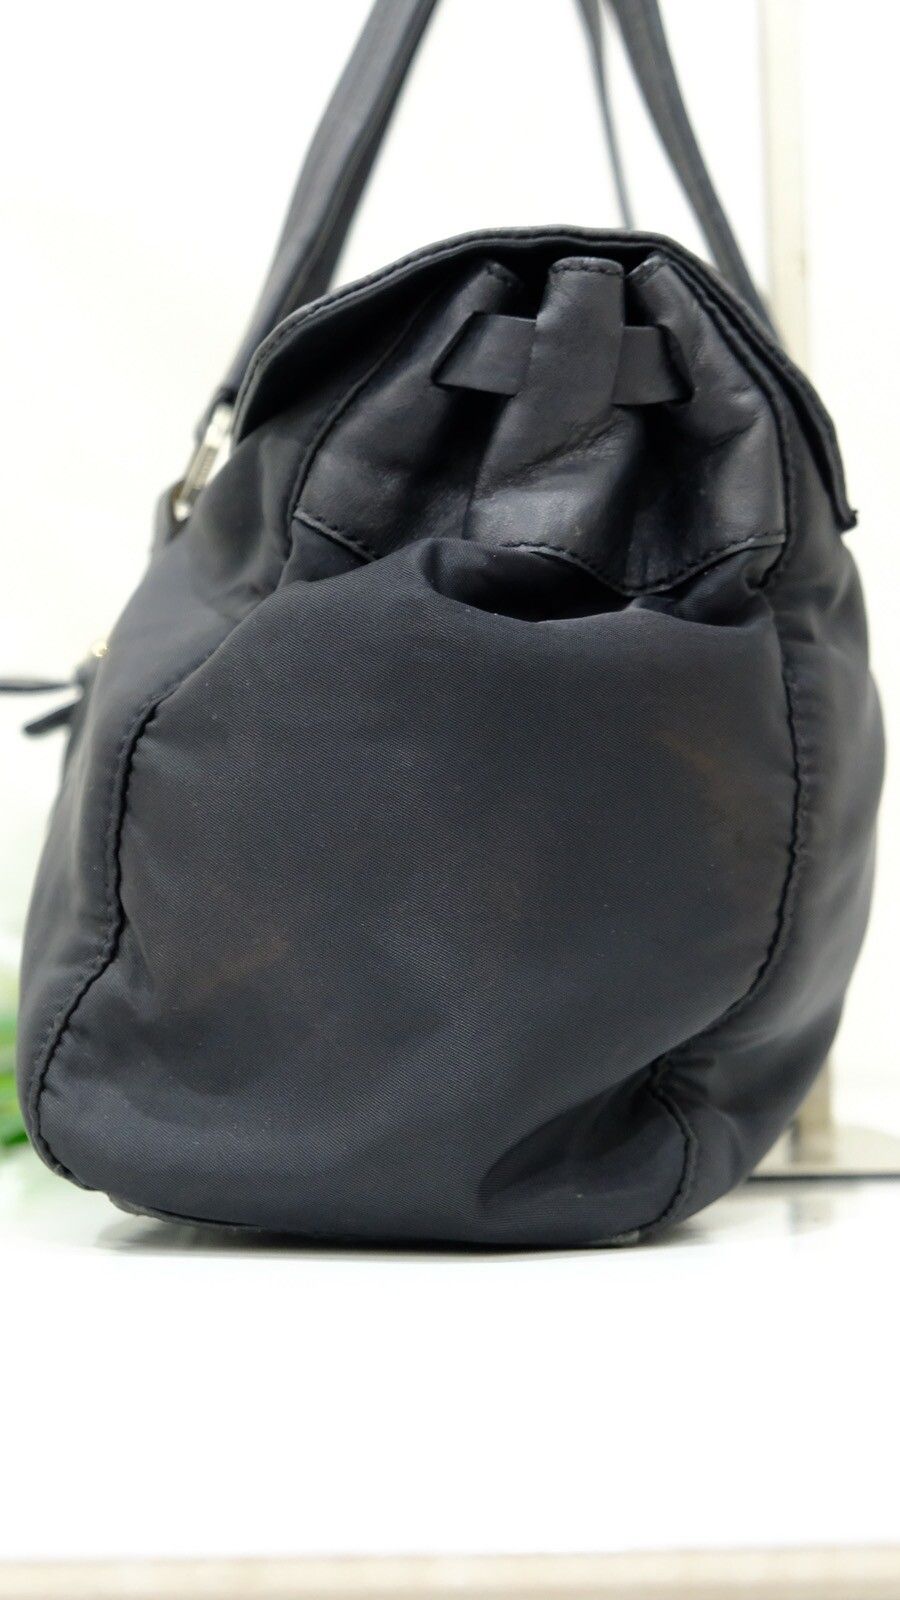 Authentic Black Prada handbag leather and nylon - 9